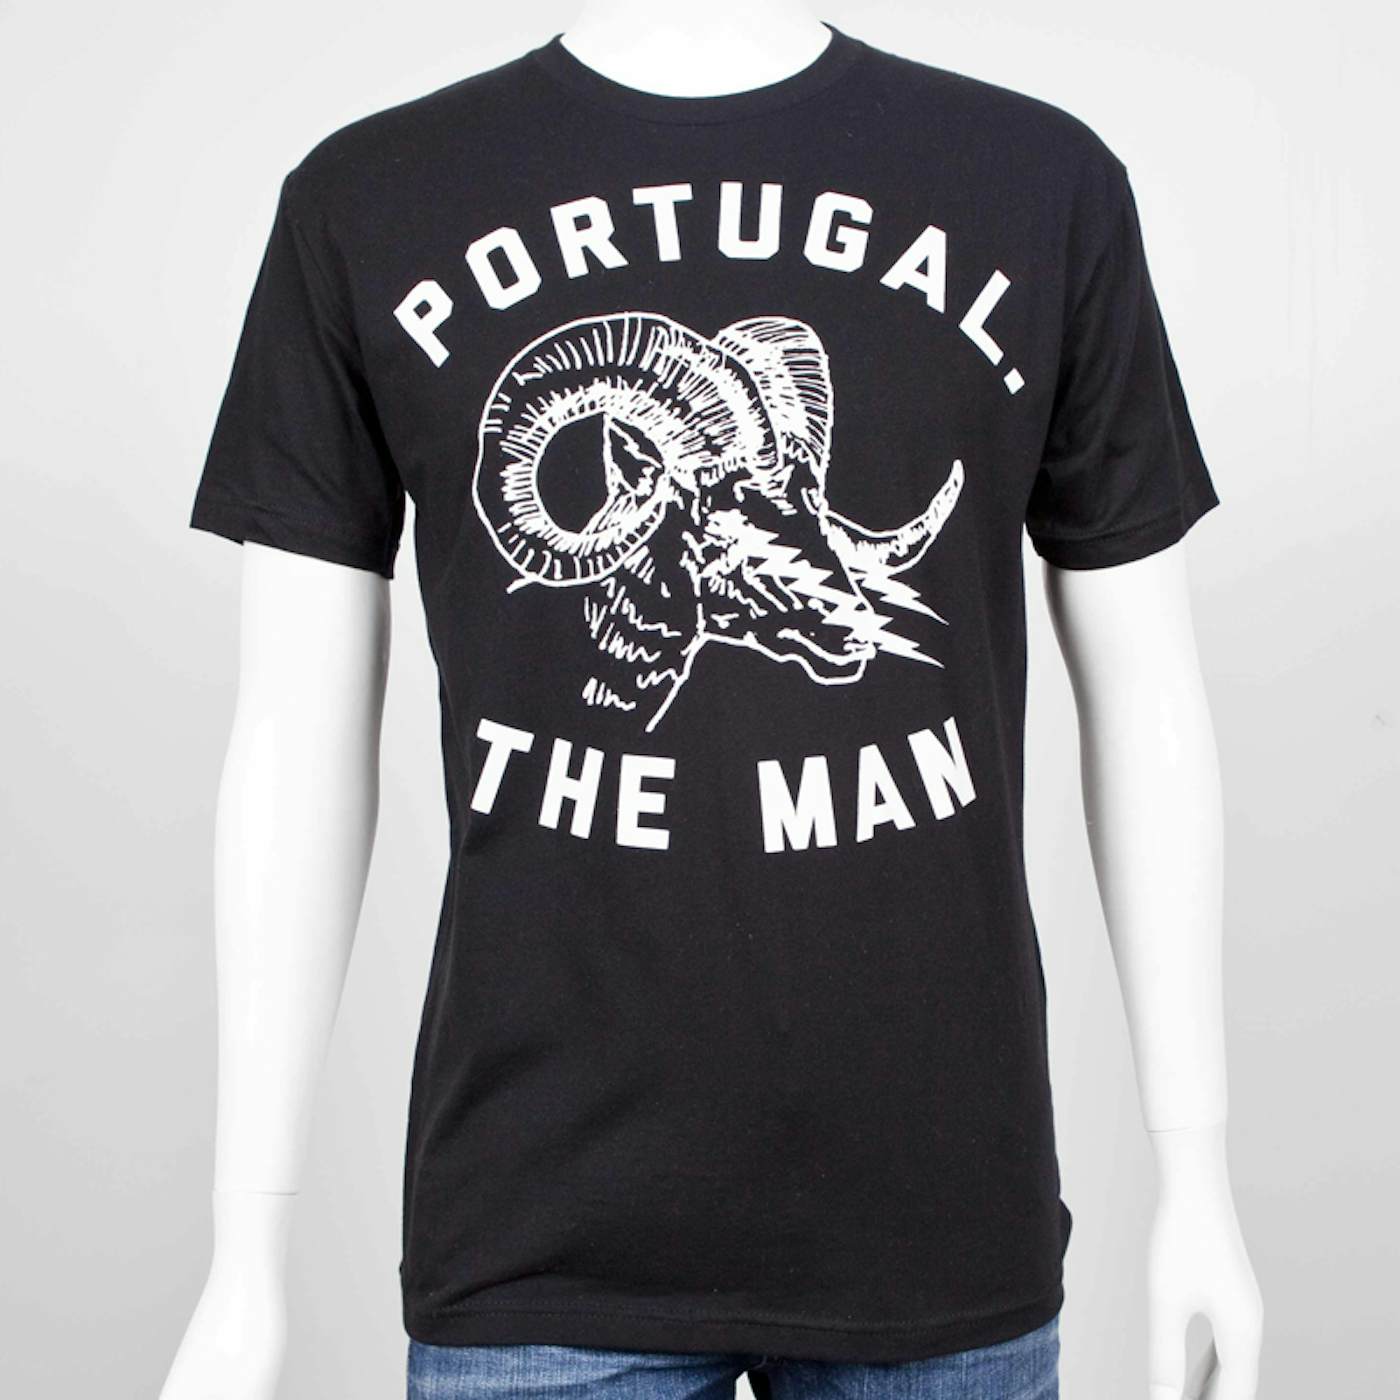 Portugal. The Man Ram T-Shirt